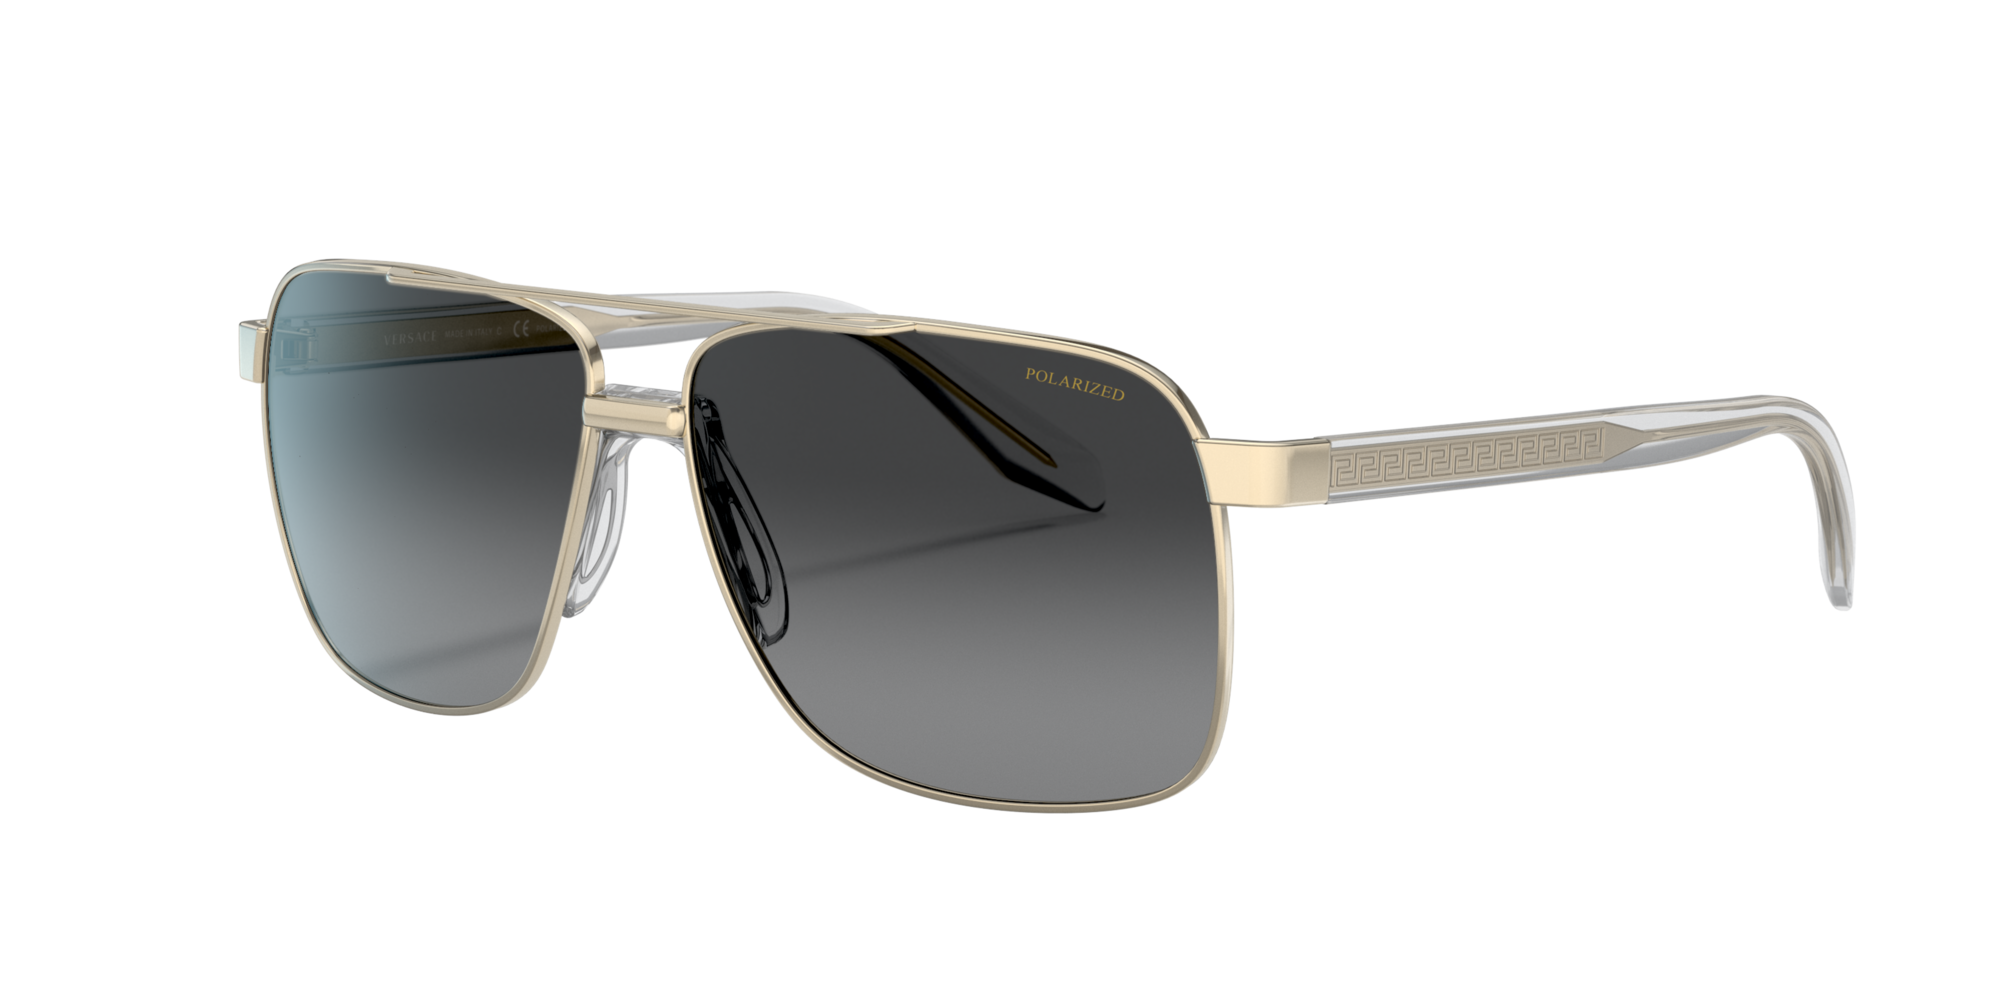 versace 2174 sunglasses